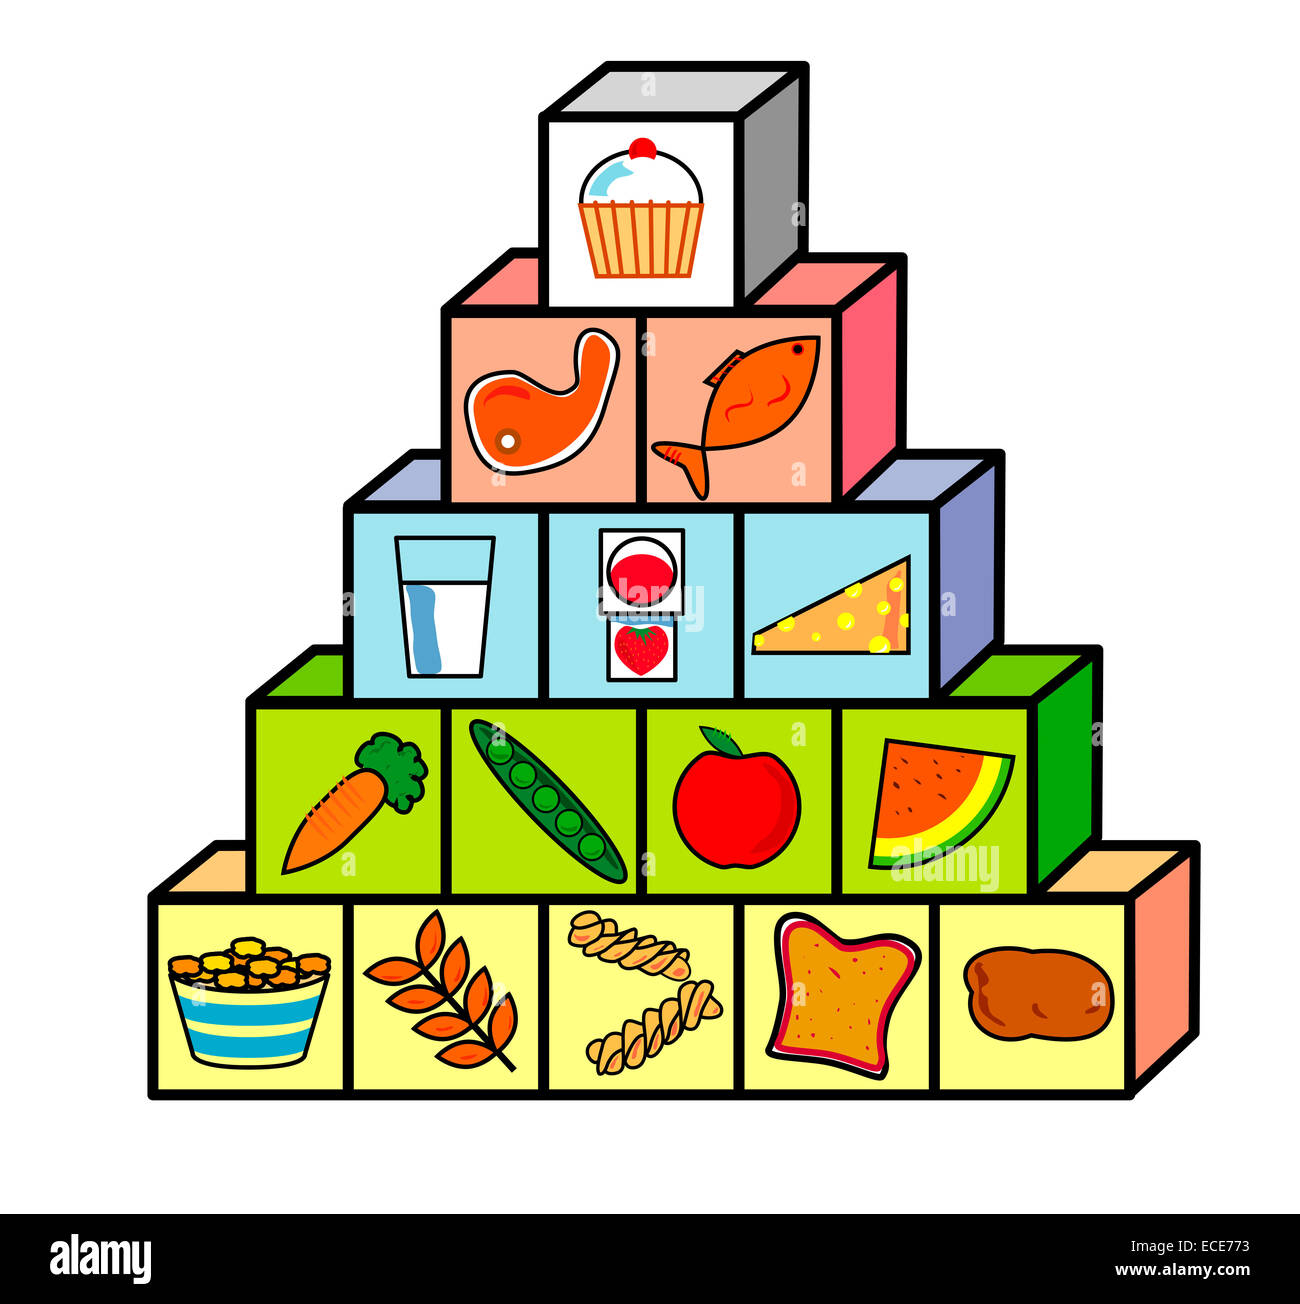 Food Pyramid building blocks Stock Photo